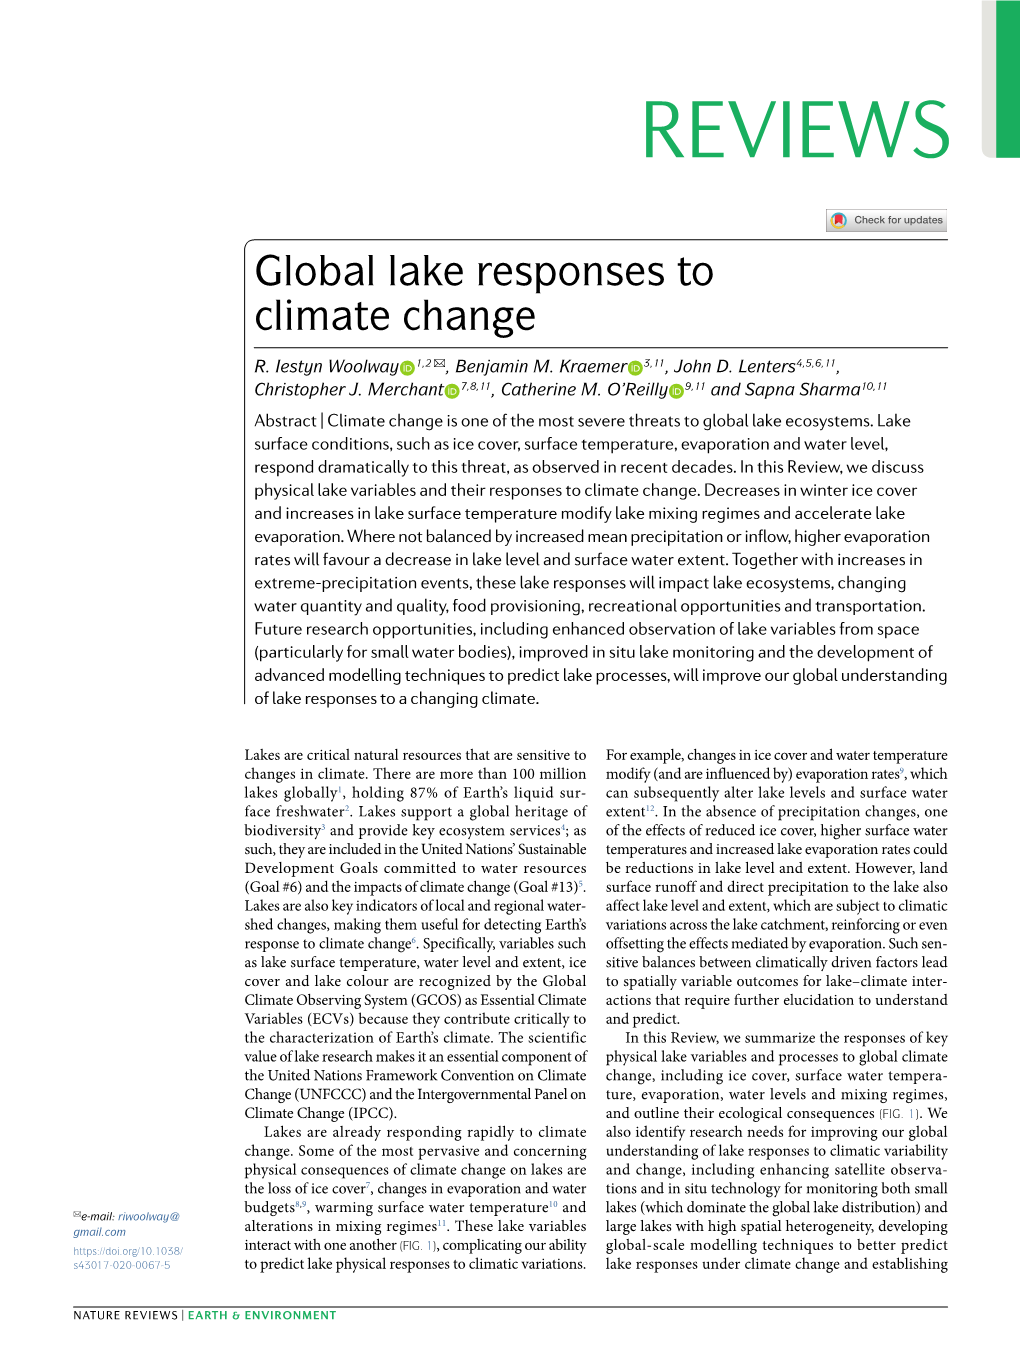 Global Lake Responses to Climate Change